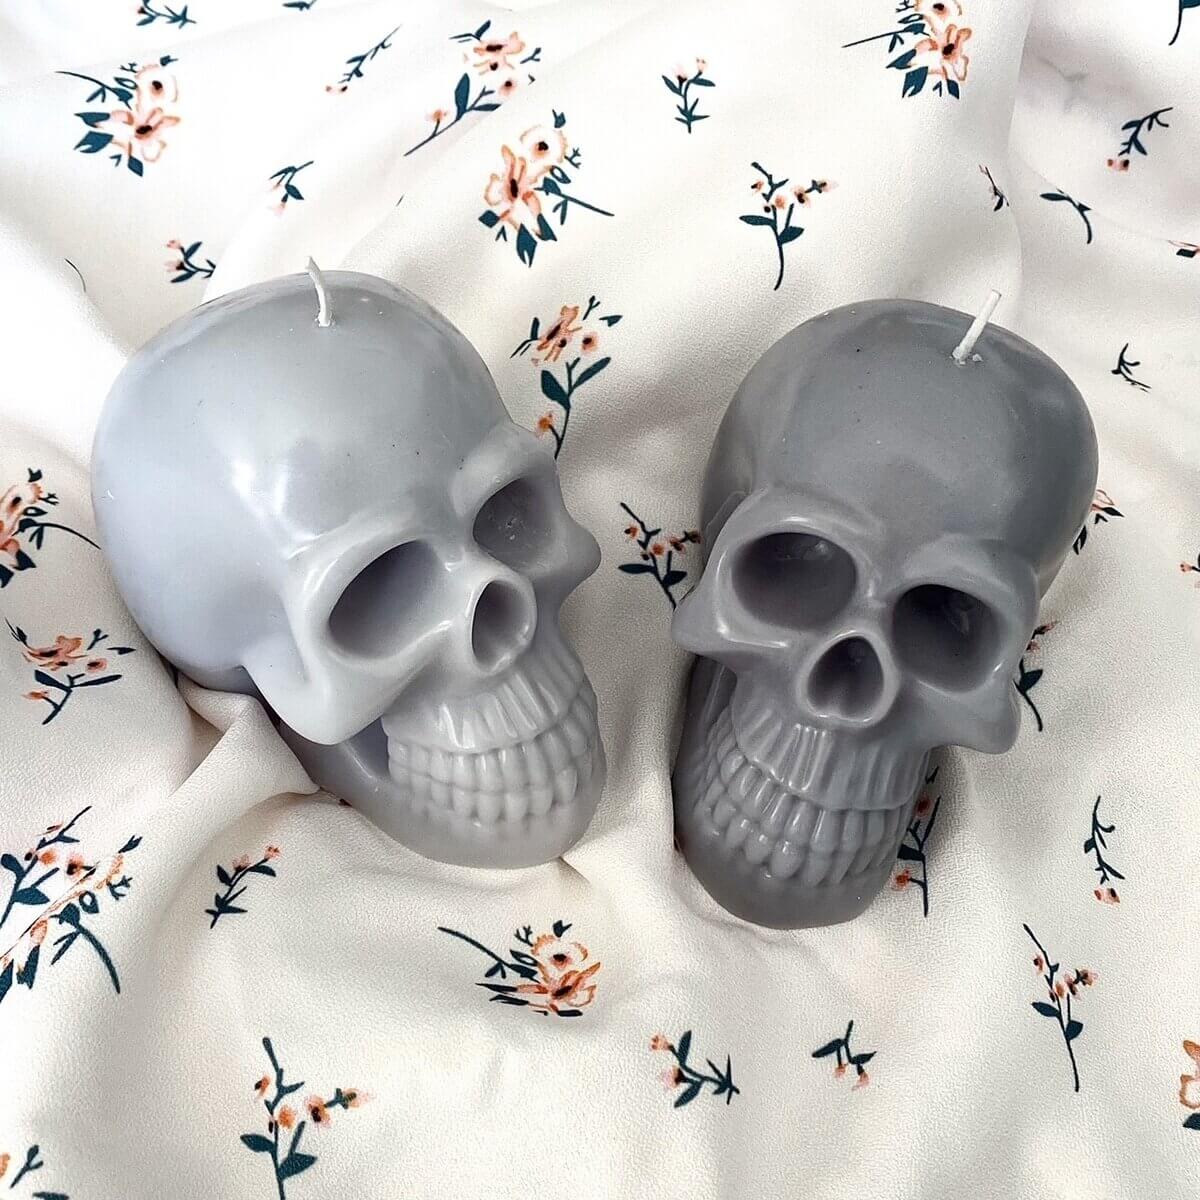 2 grey wax skulls on a white sheet